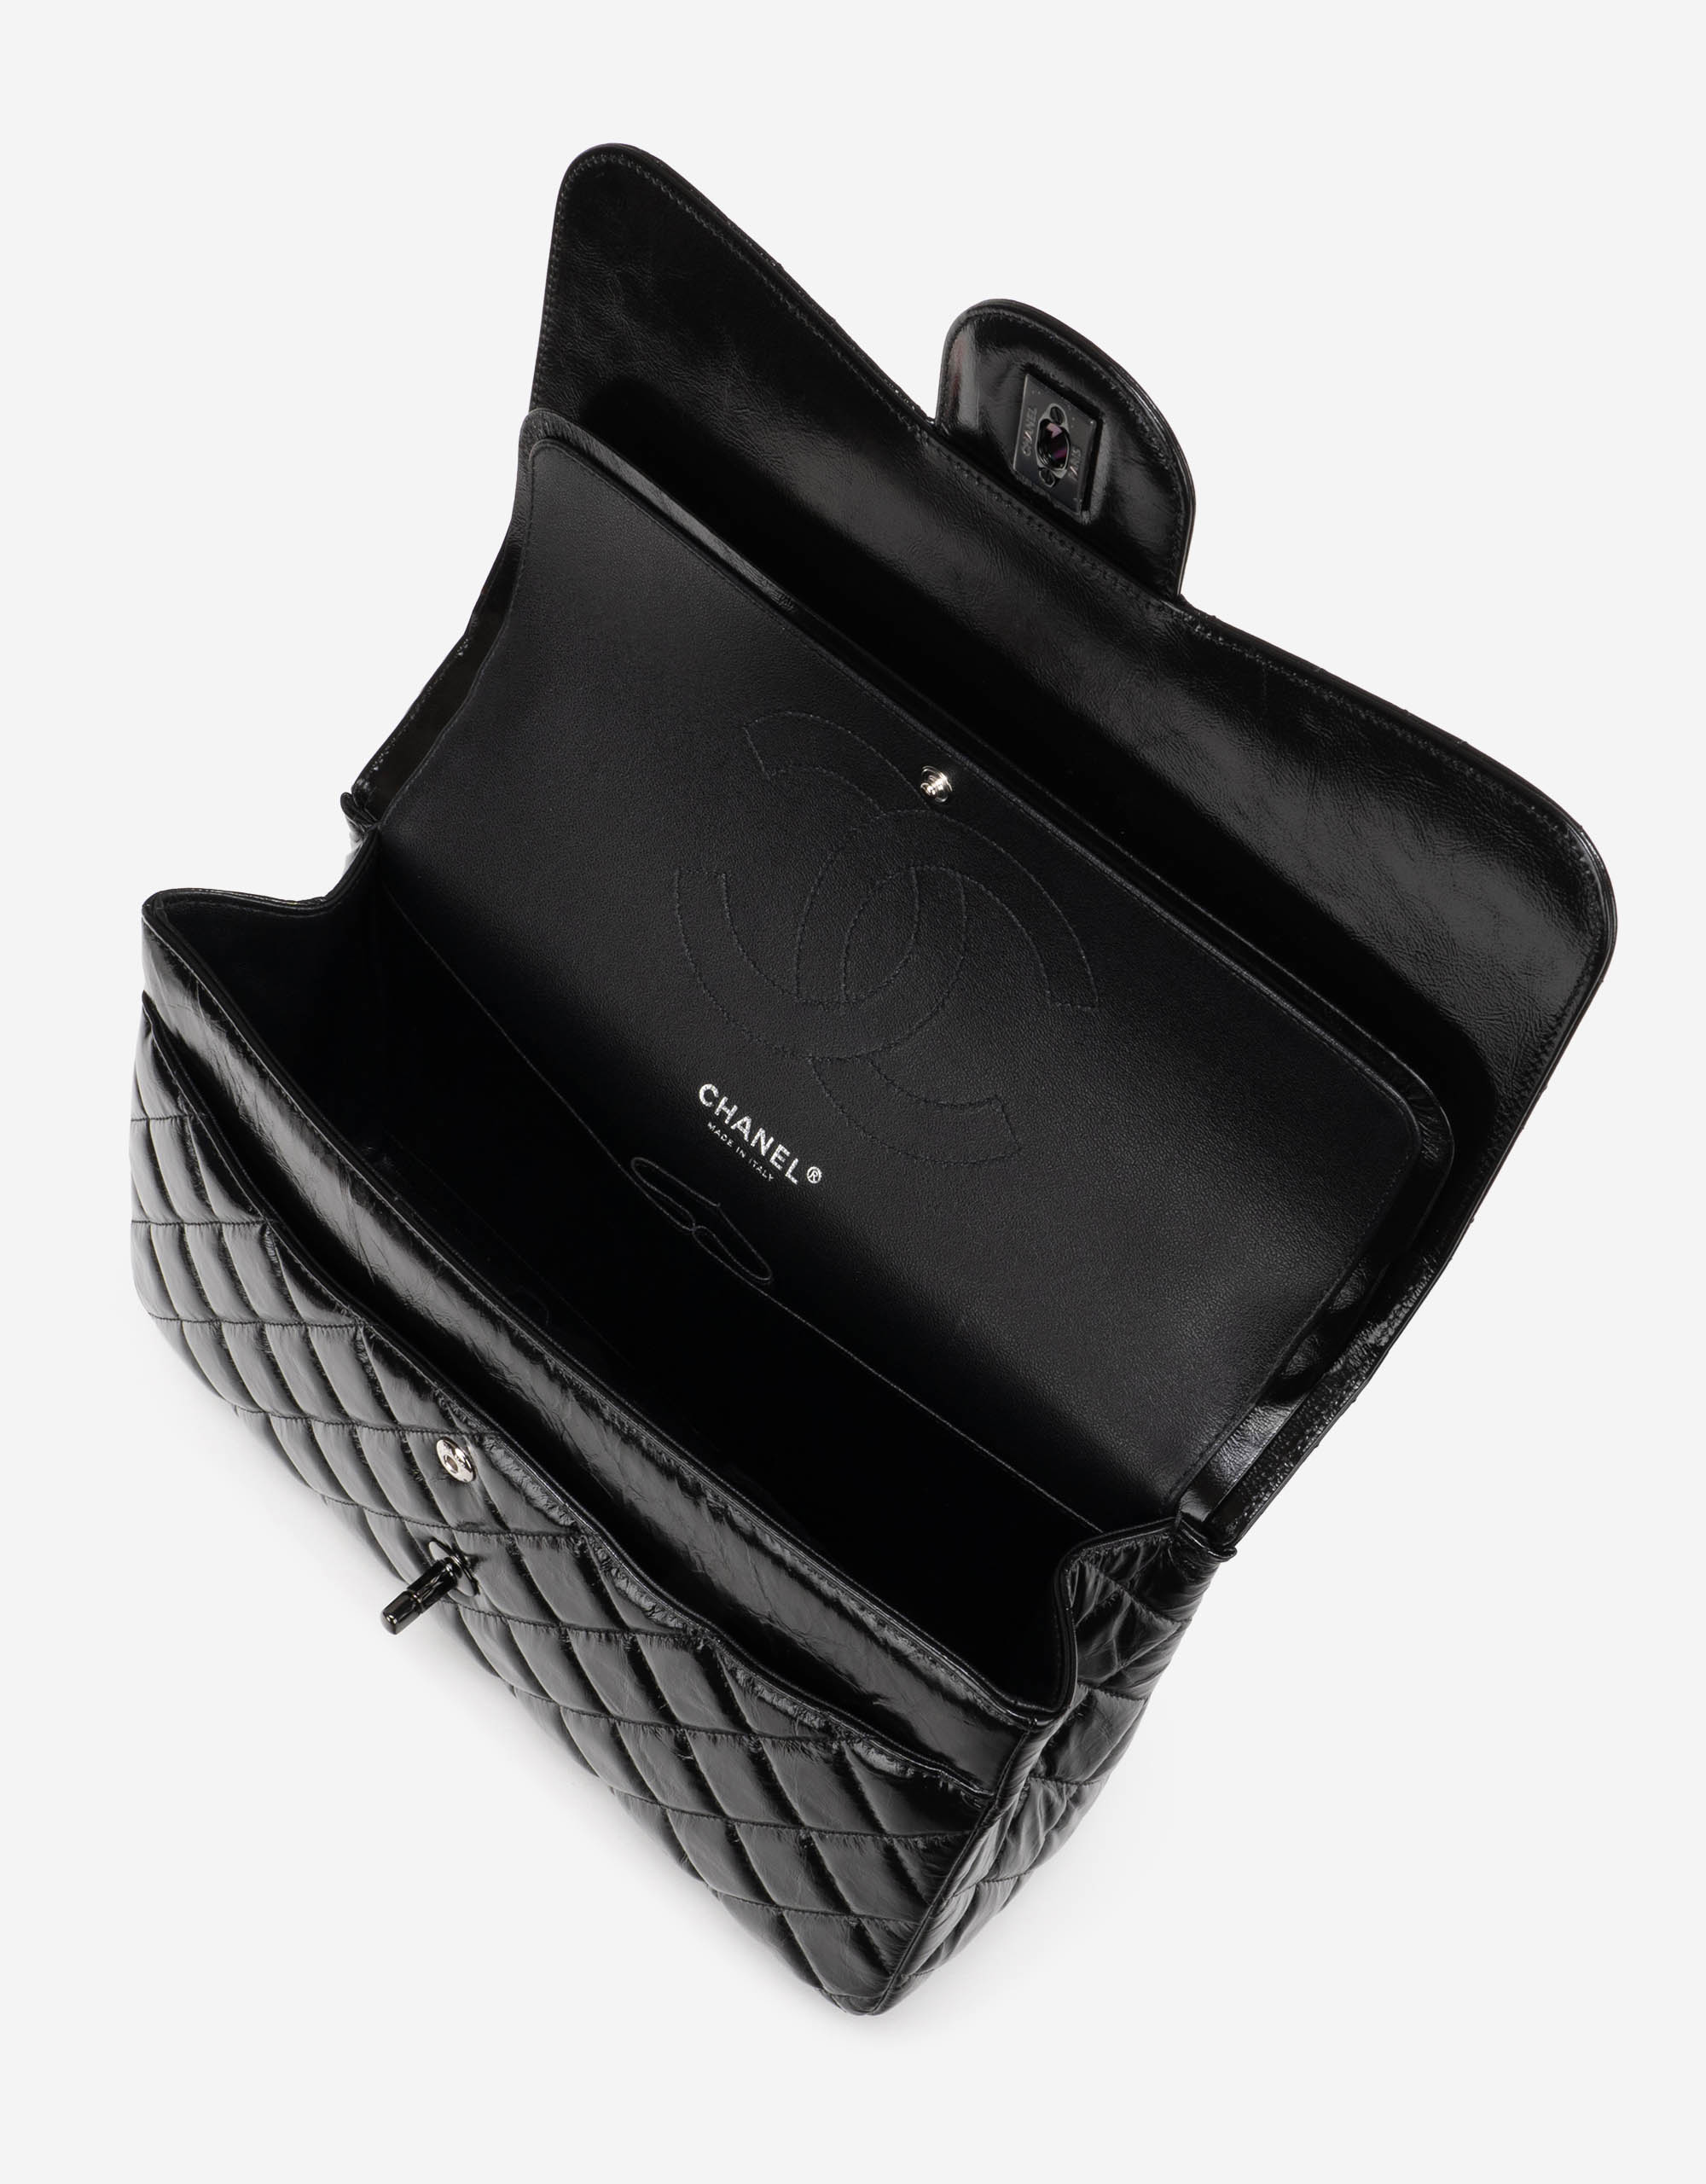 Pre-owned Chanel bag Timeless Jumbo Patent So Black Black | Sell your designer bag on Saclab.com